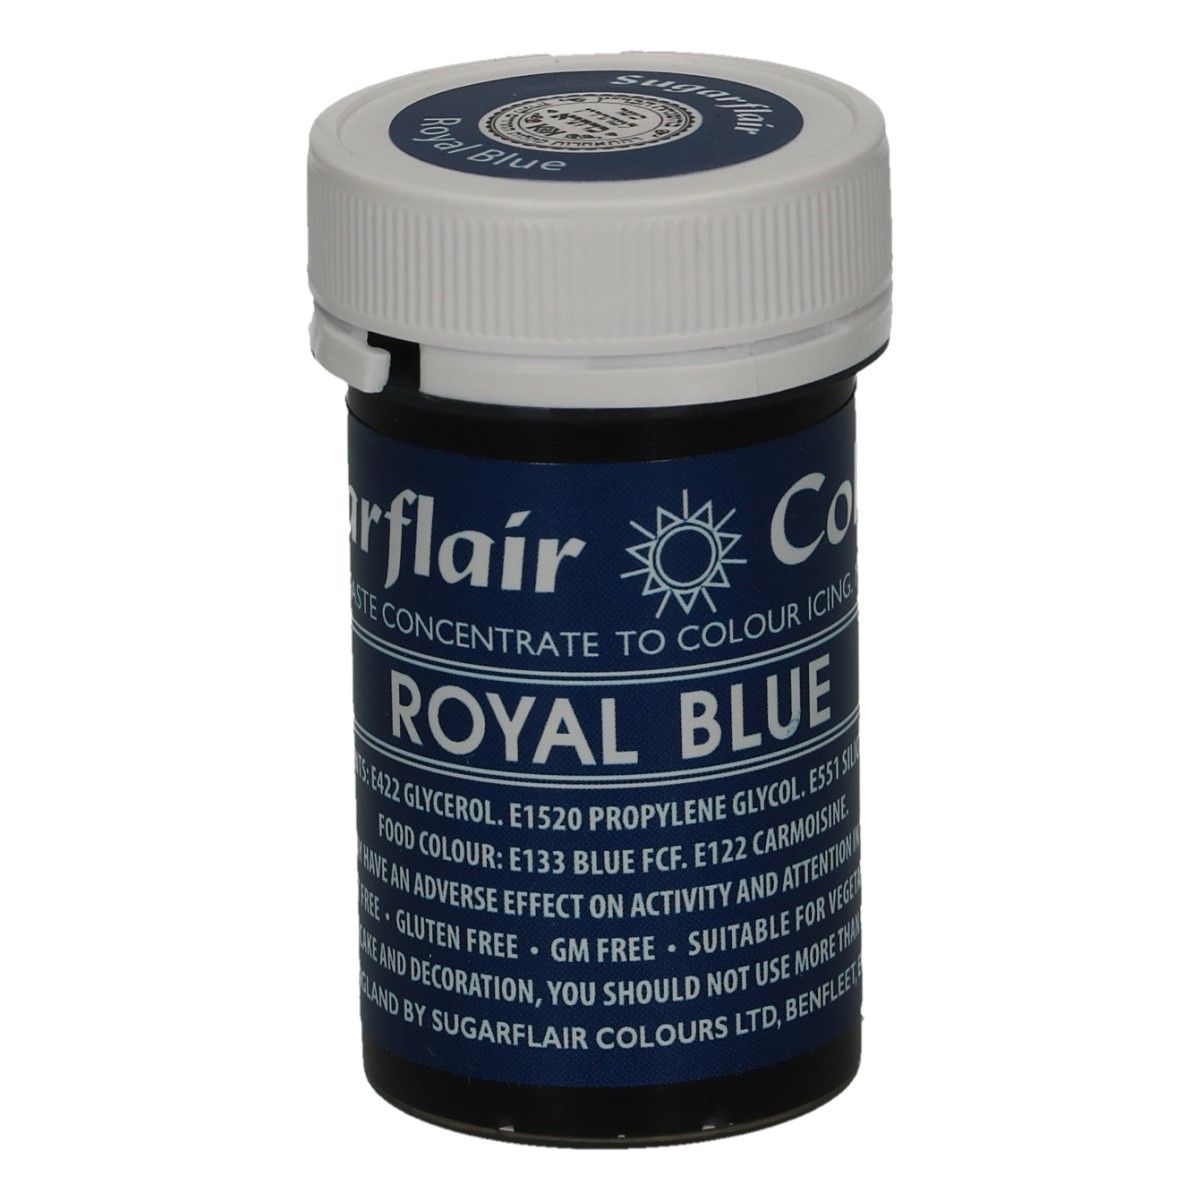 Sugarflair Paste Colour Royal Blue, 25g